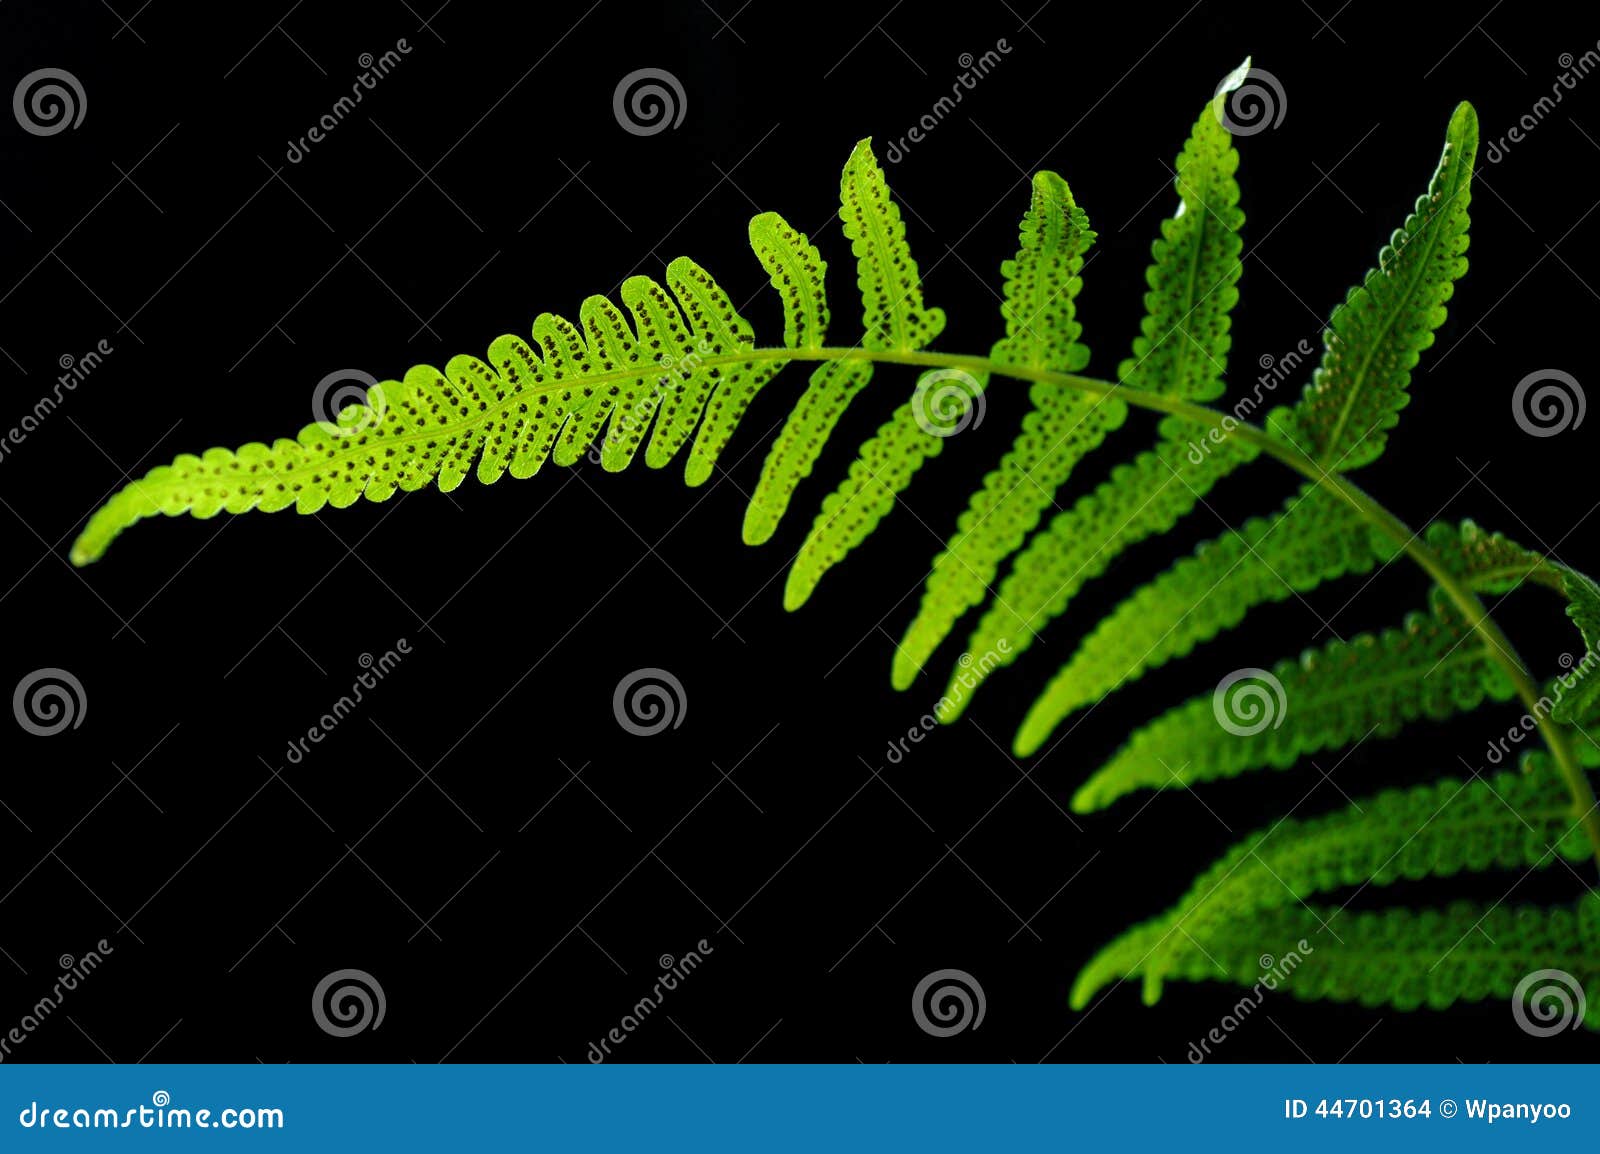 vegetable fern